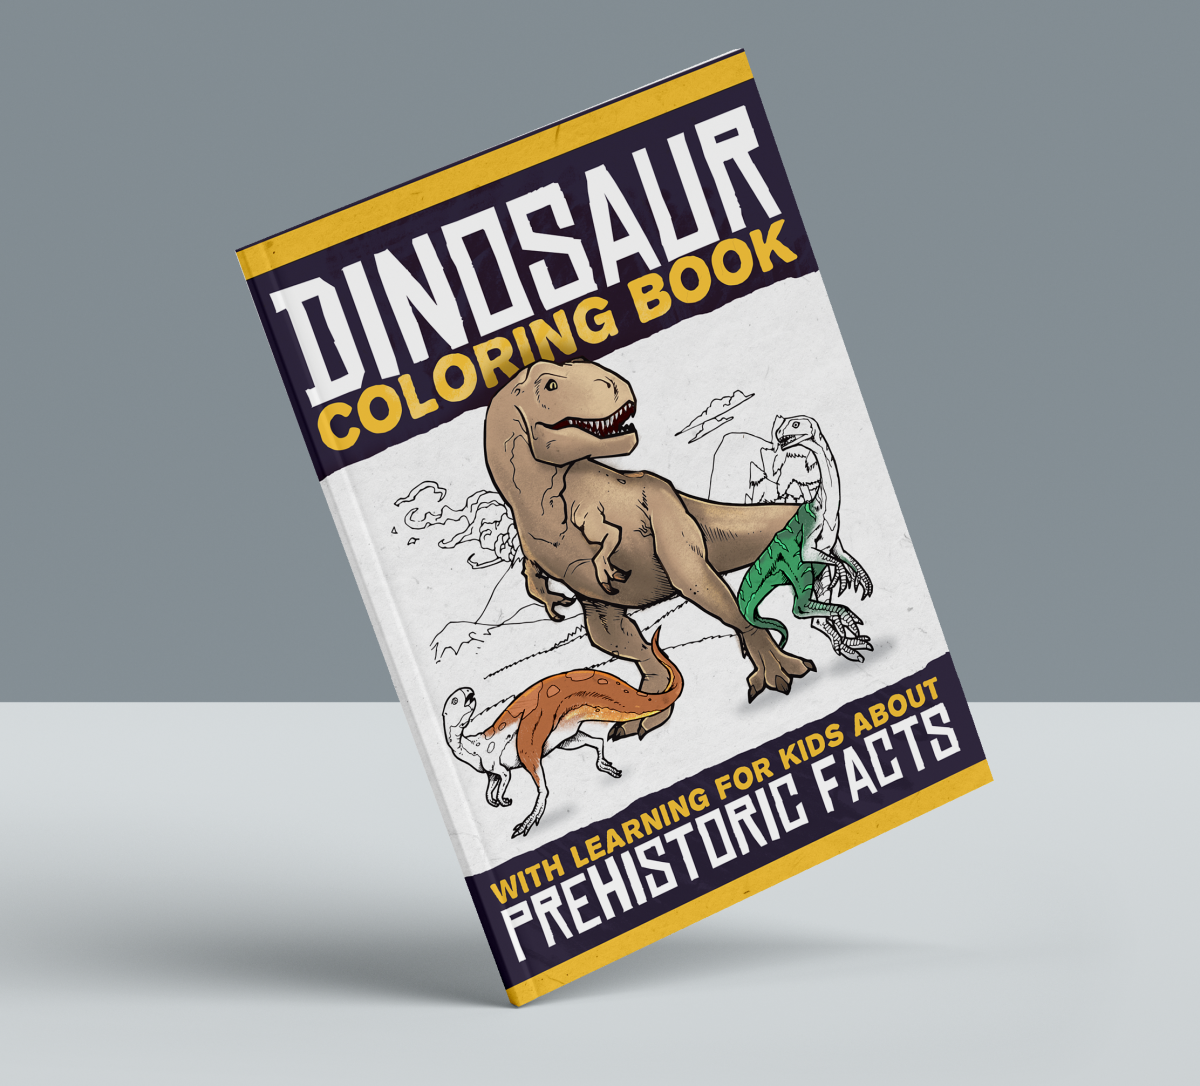 Dinosaur colouring book for kids